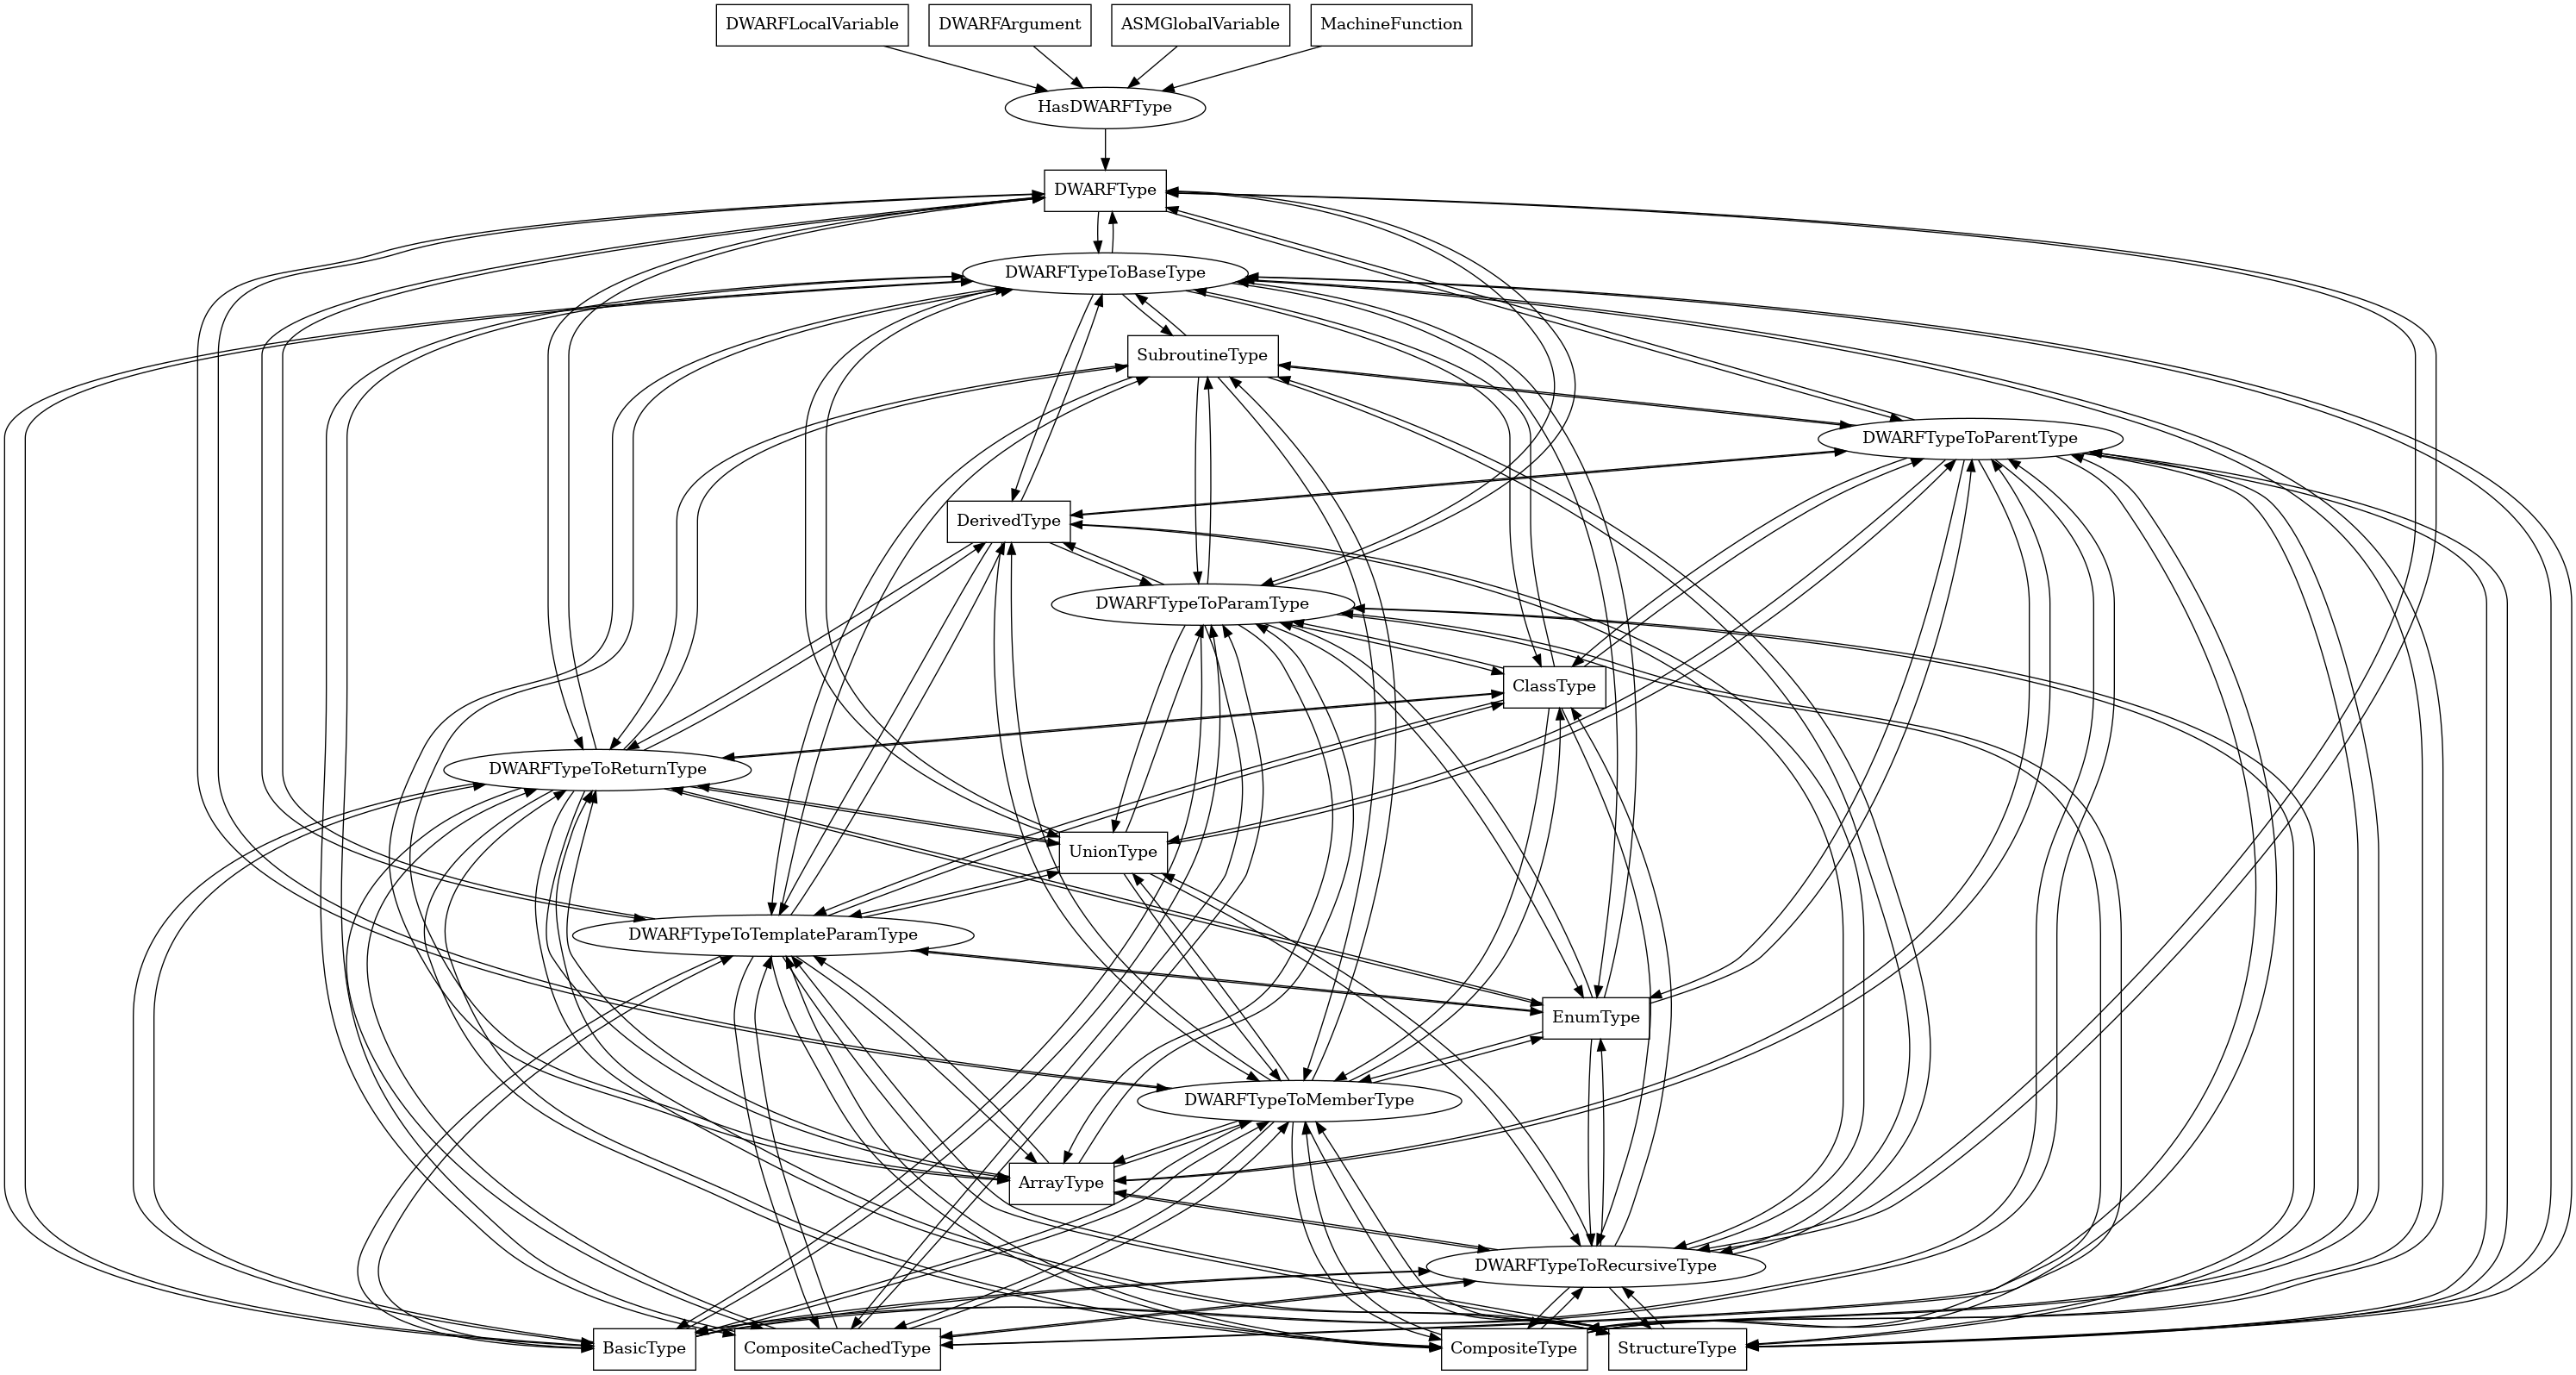 Entity-relationship diagram for DWARFType nodes